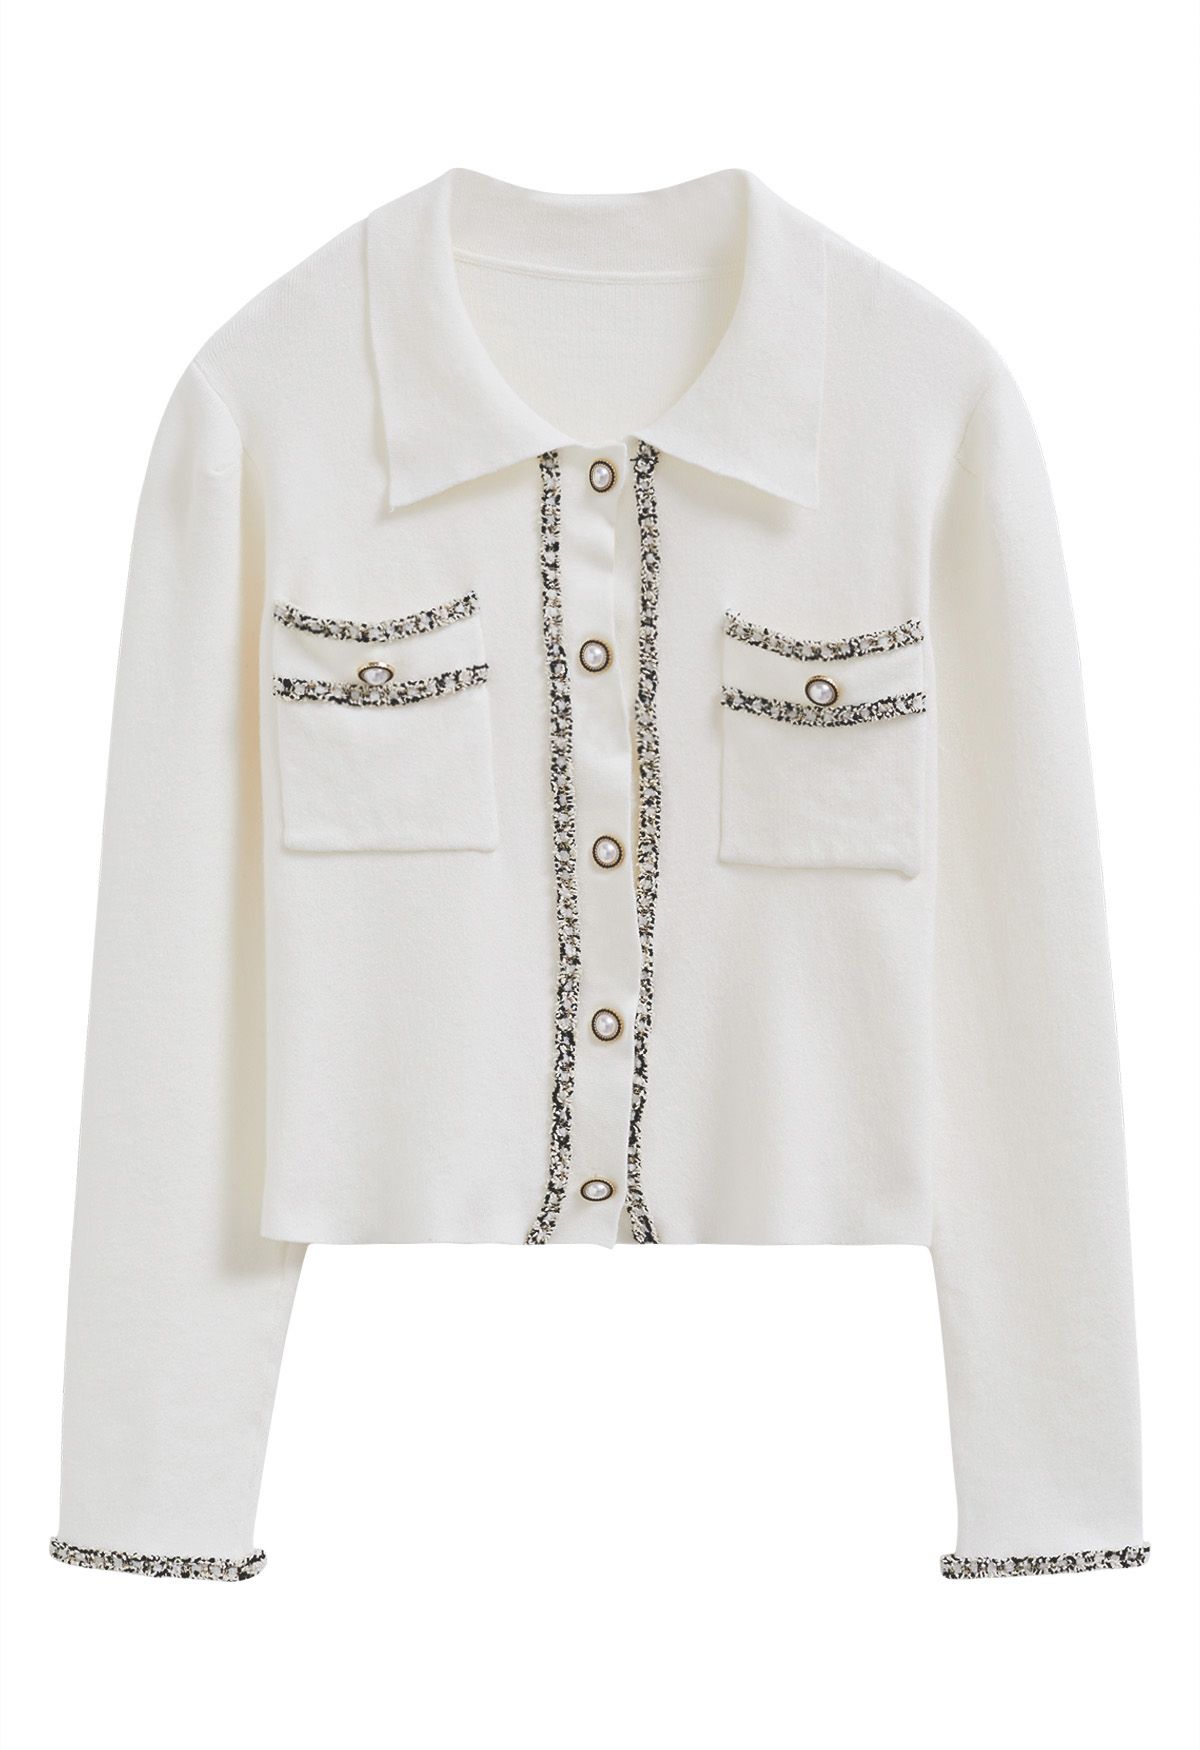 Contrast in Unique Knit Retro, Button Indie White Down - Trim Fashion Cardigan and